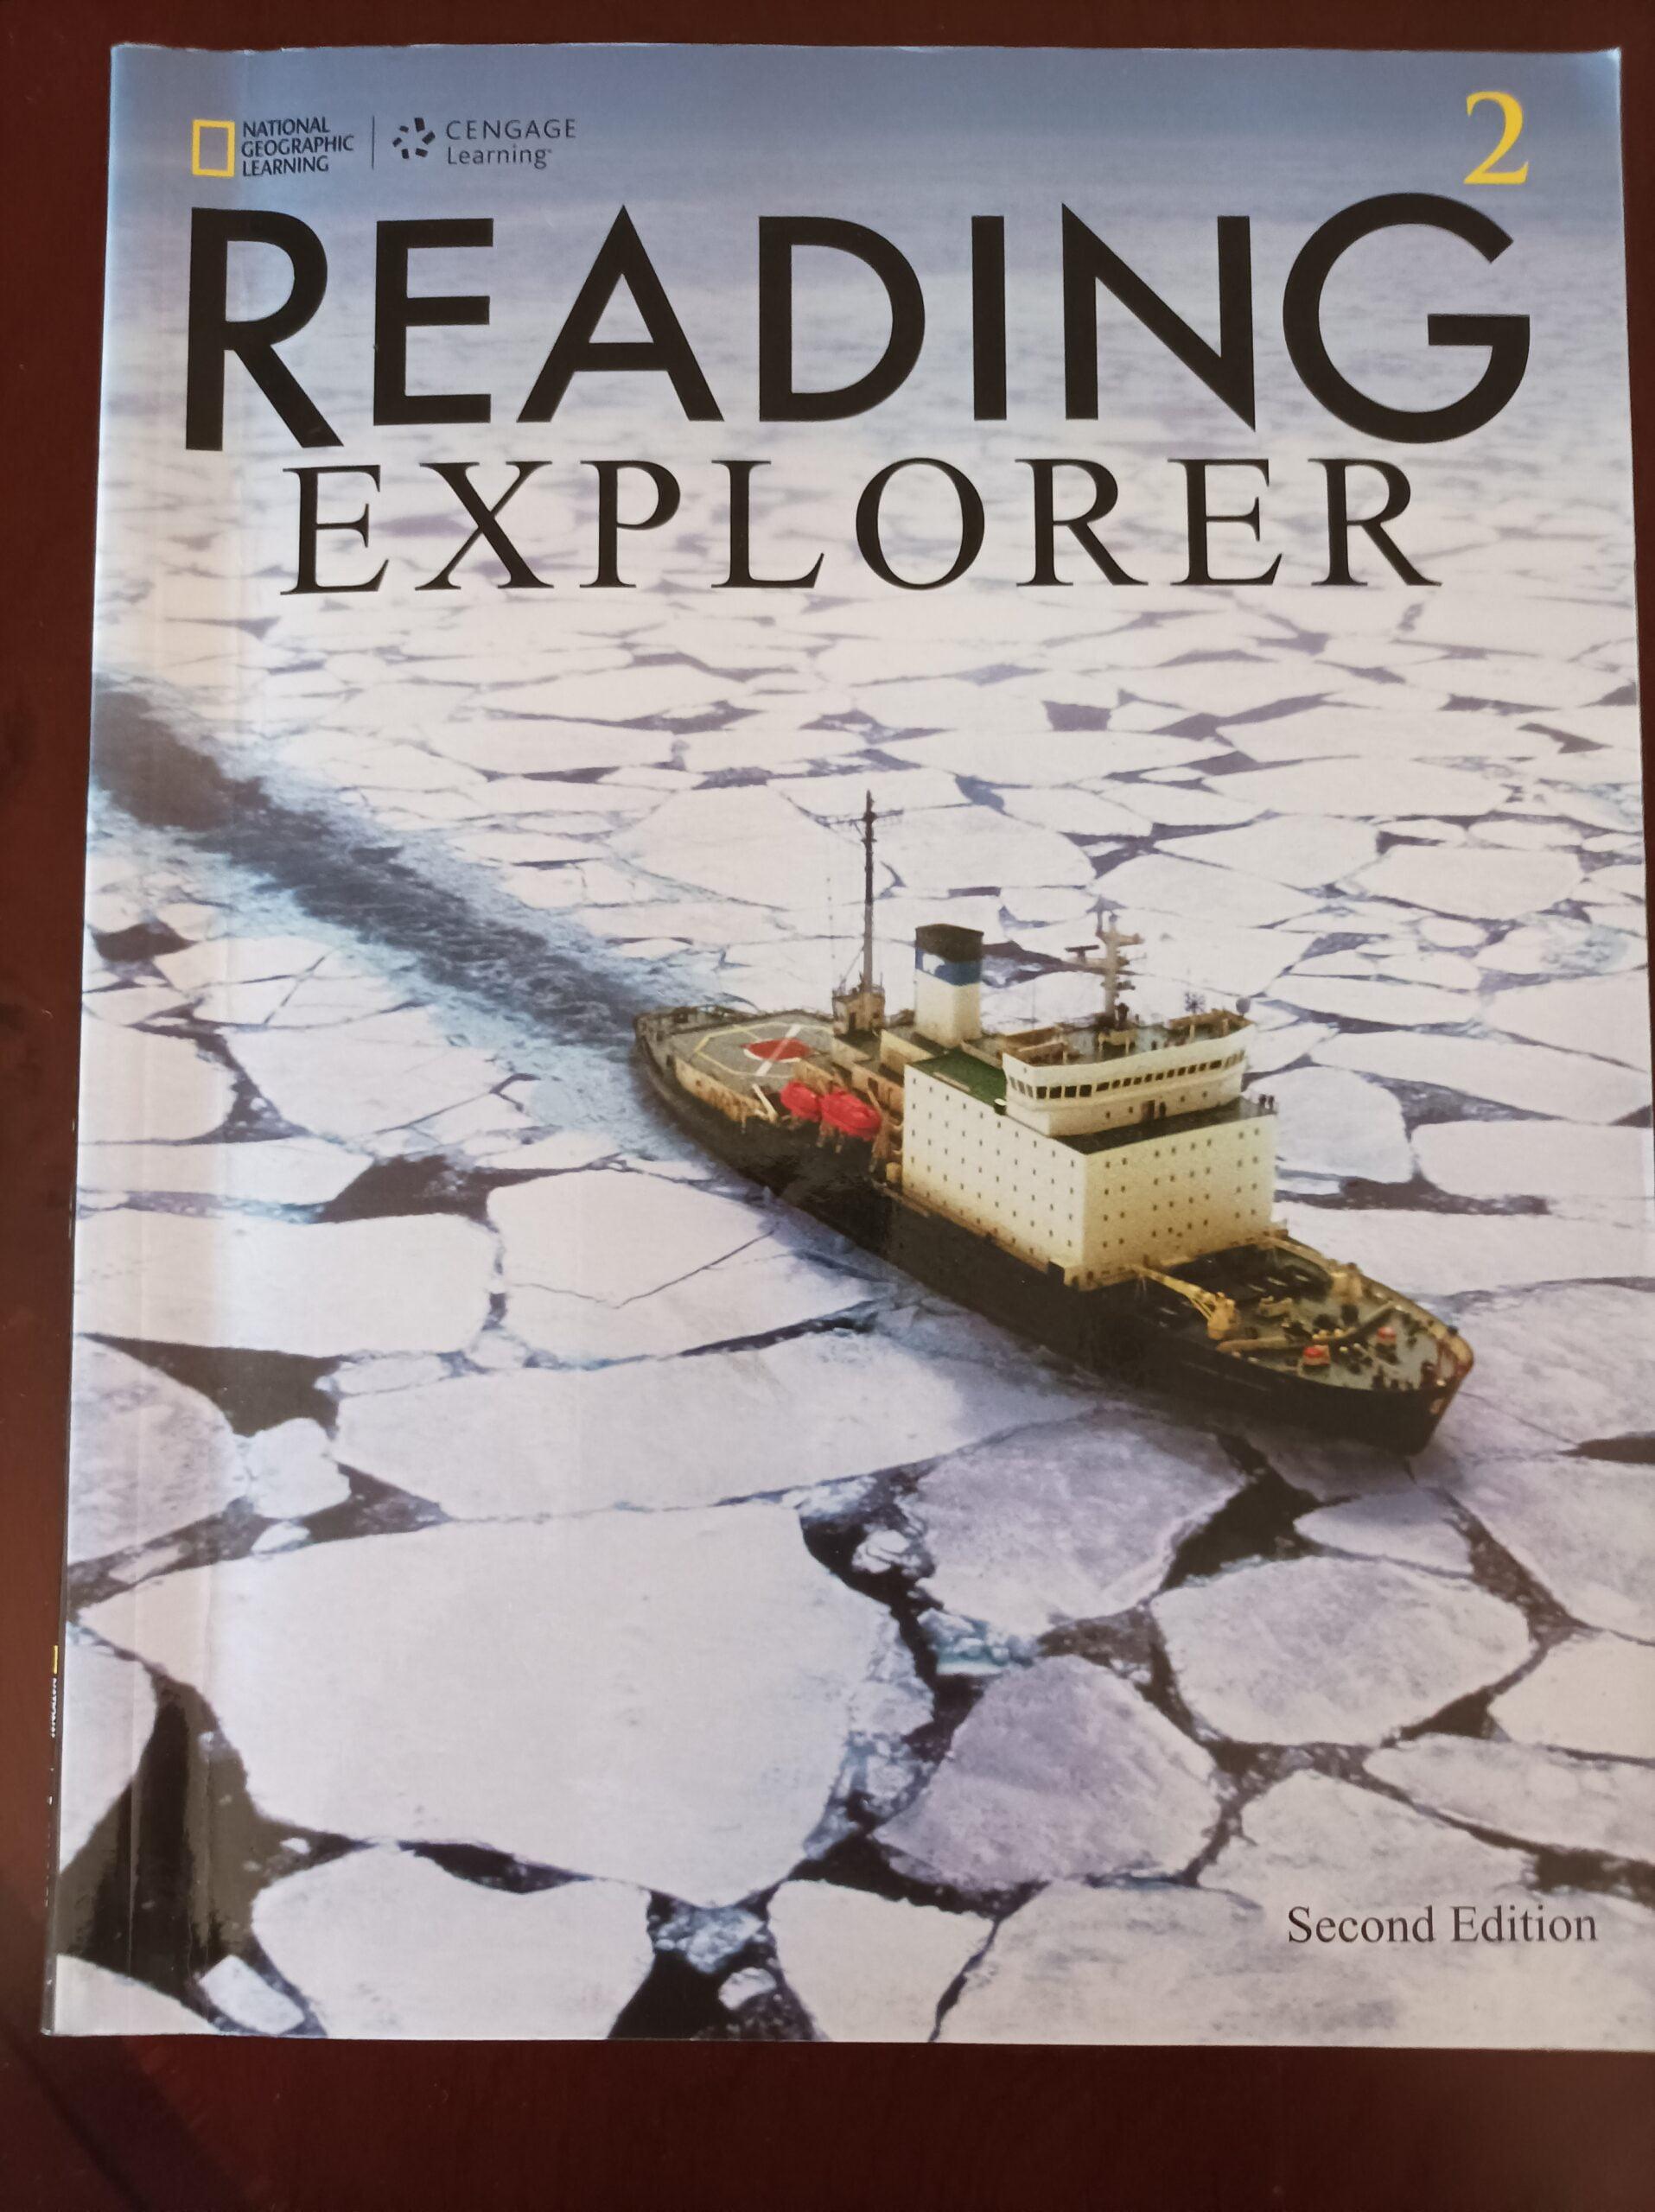 Reading Explorer Second Edition